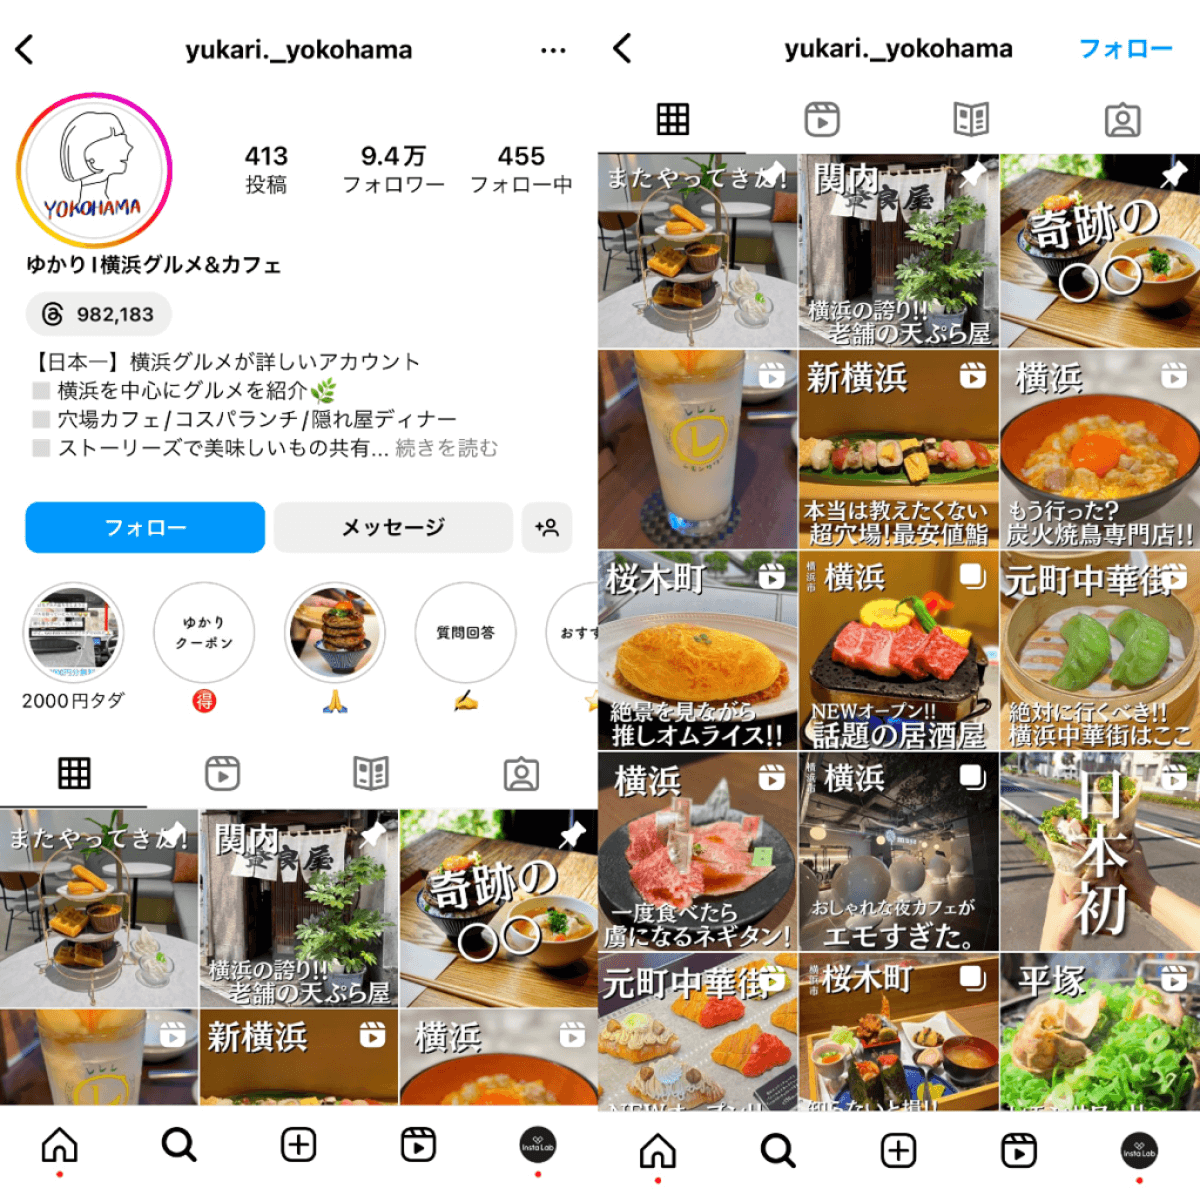 instagram-account-yukari-yokohama